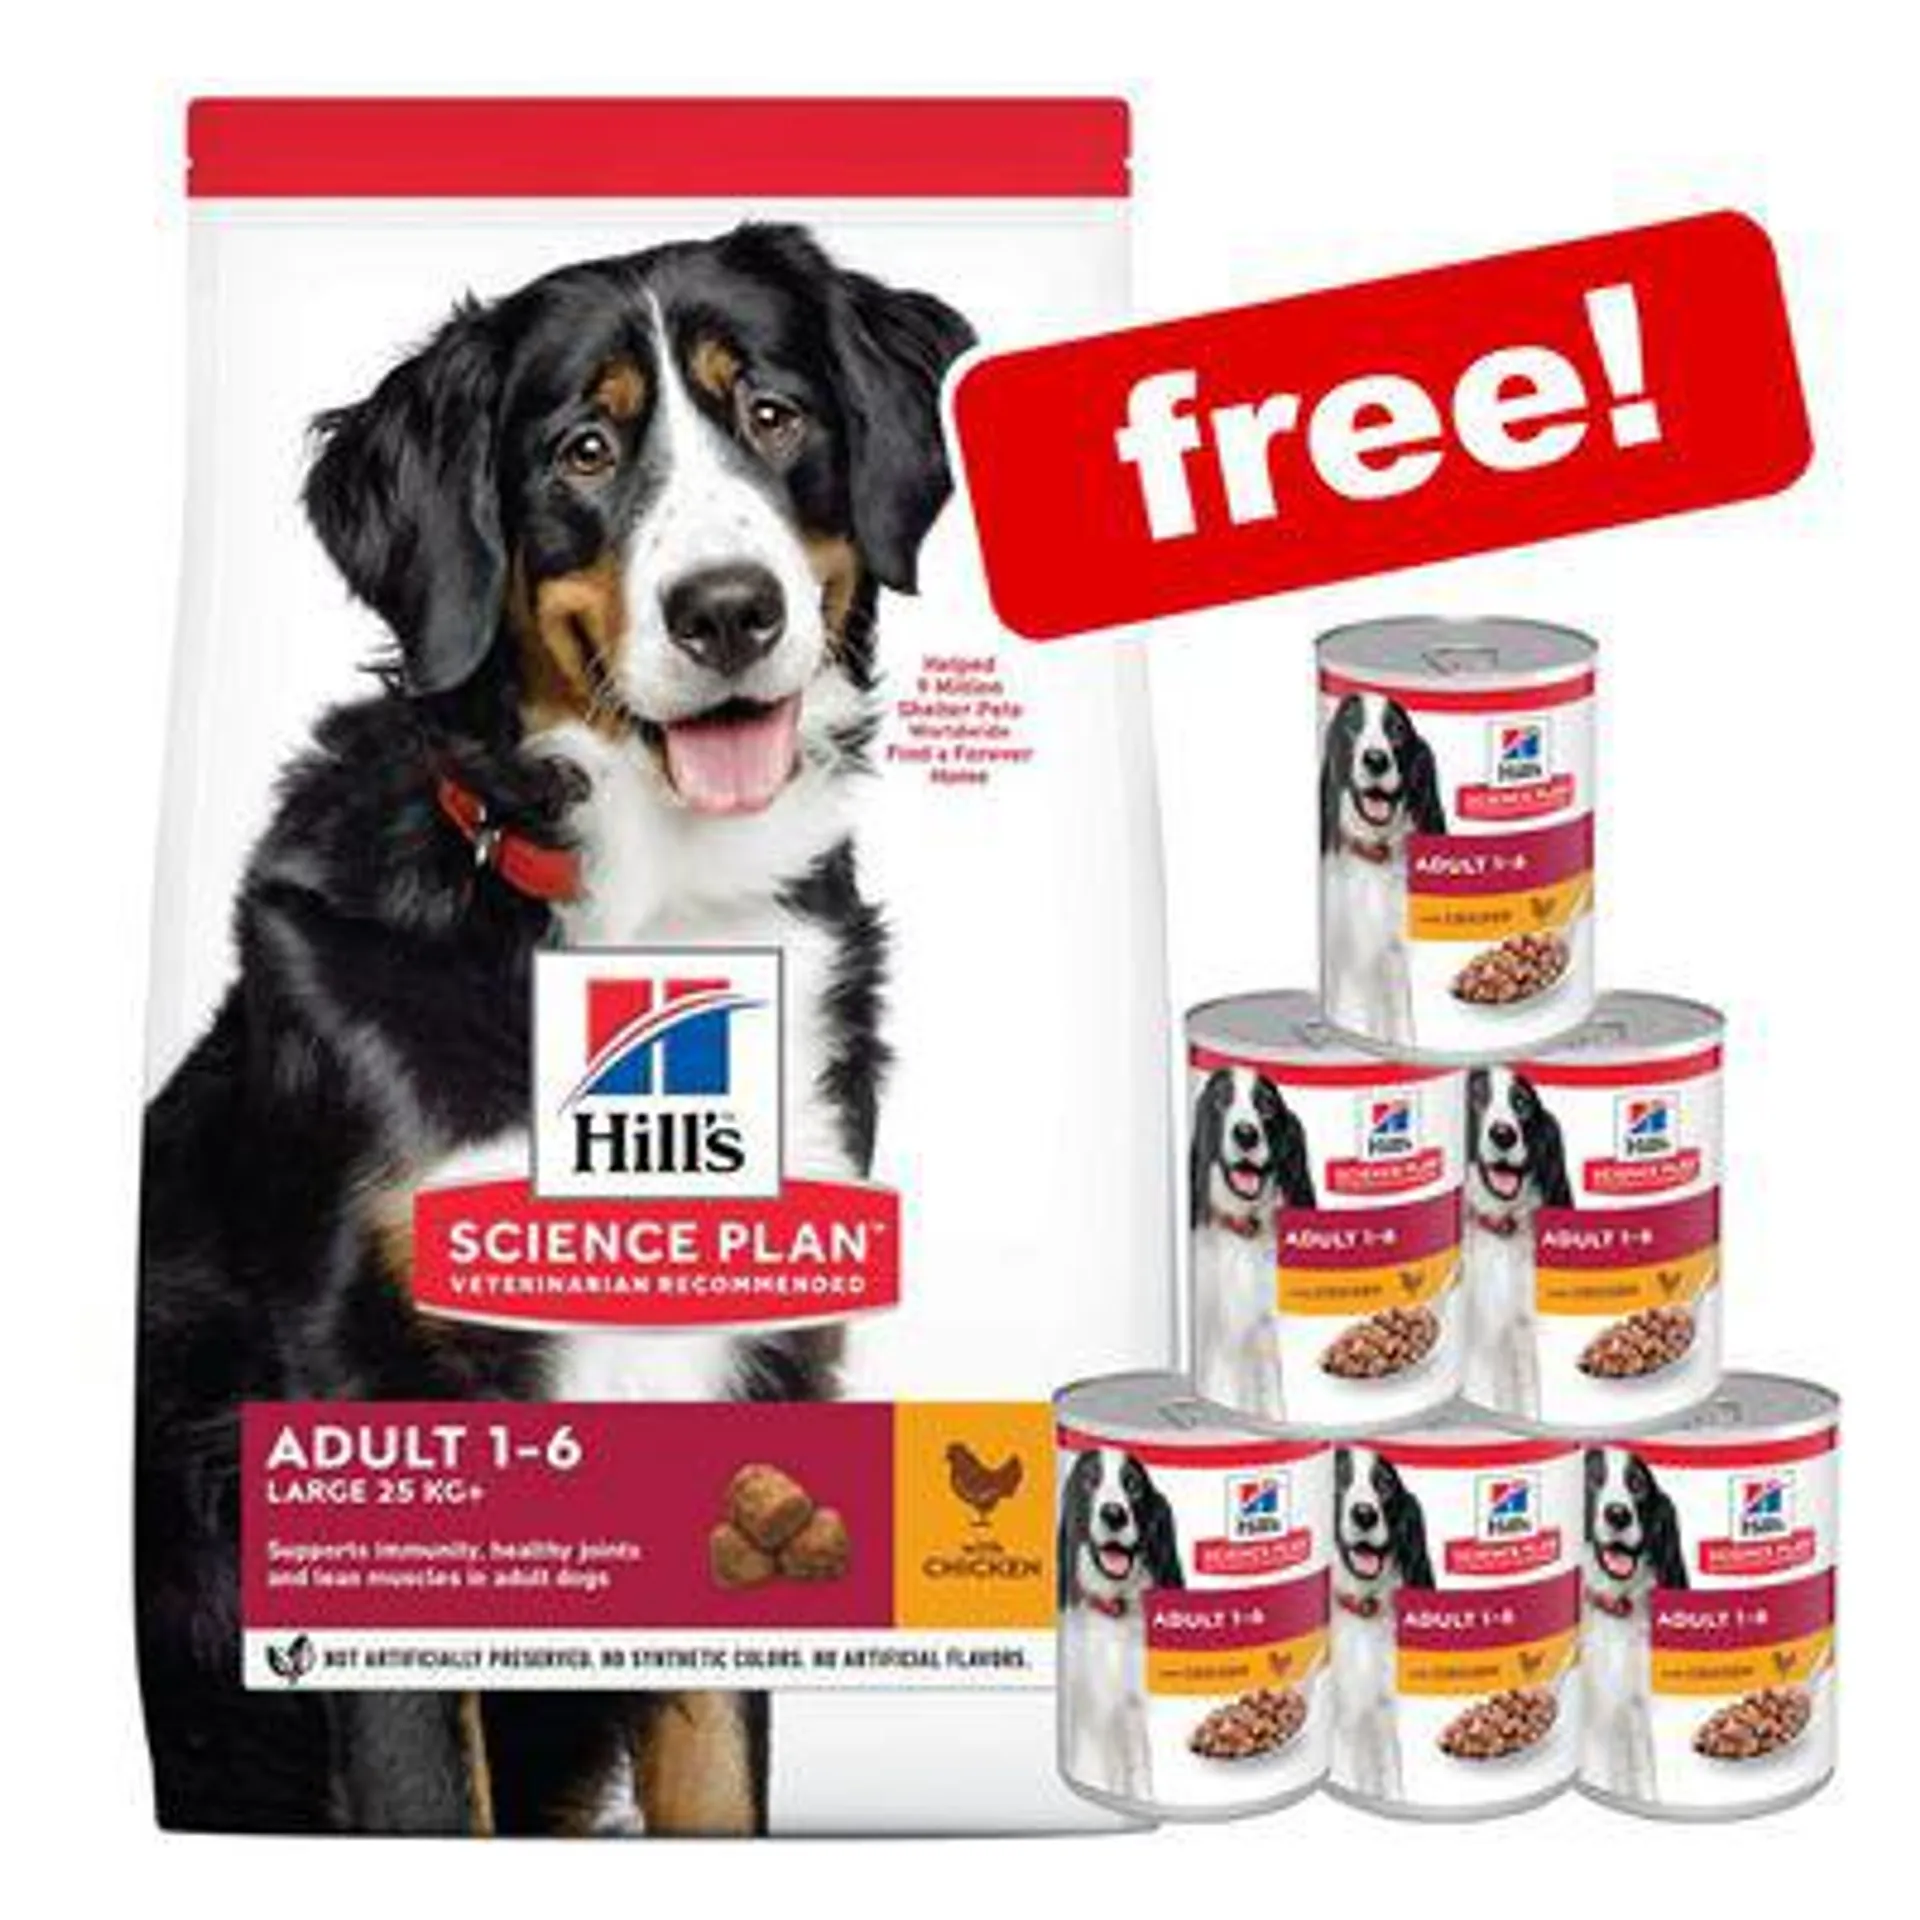 14kg/14.5kg Hill's Science Plan Dry Dog Food + 6 x 370g Wet Food Free! *